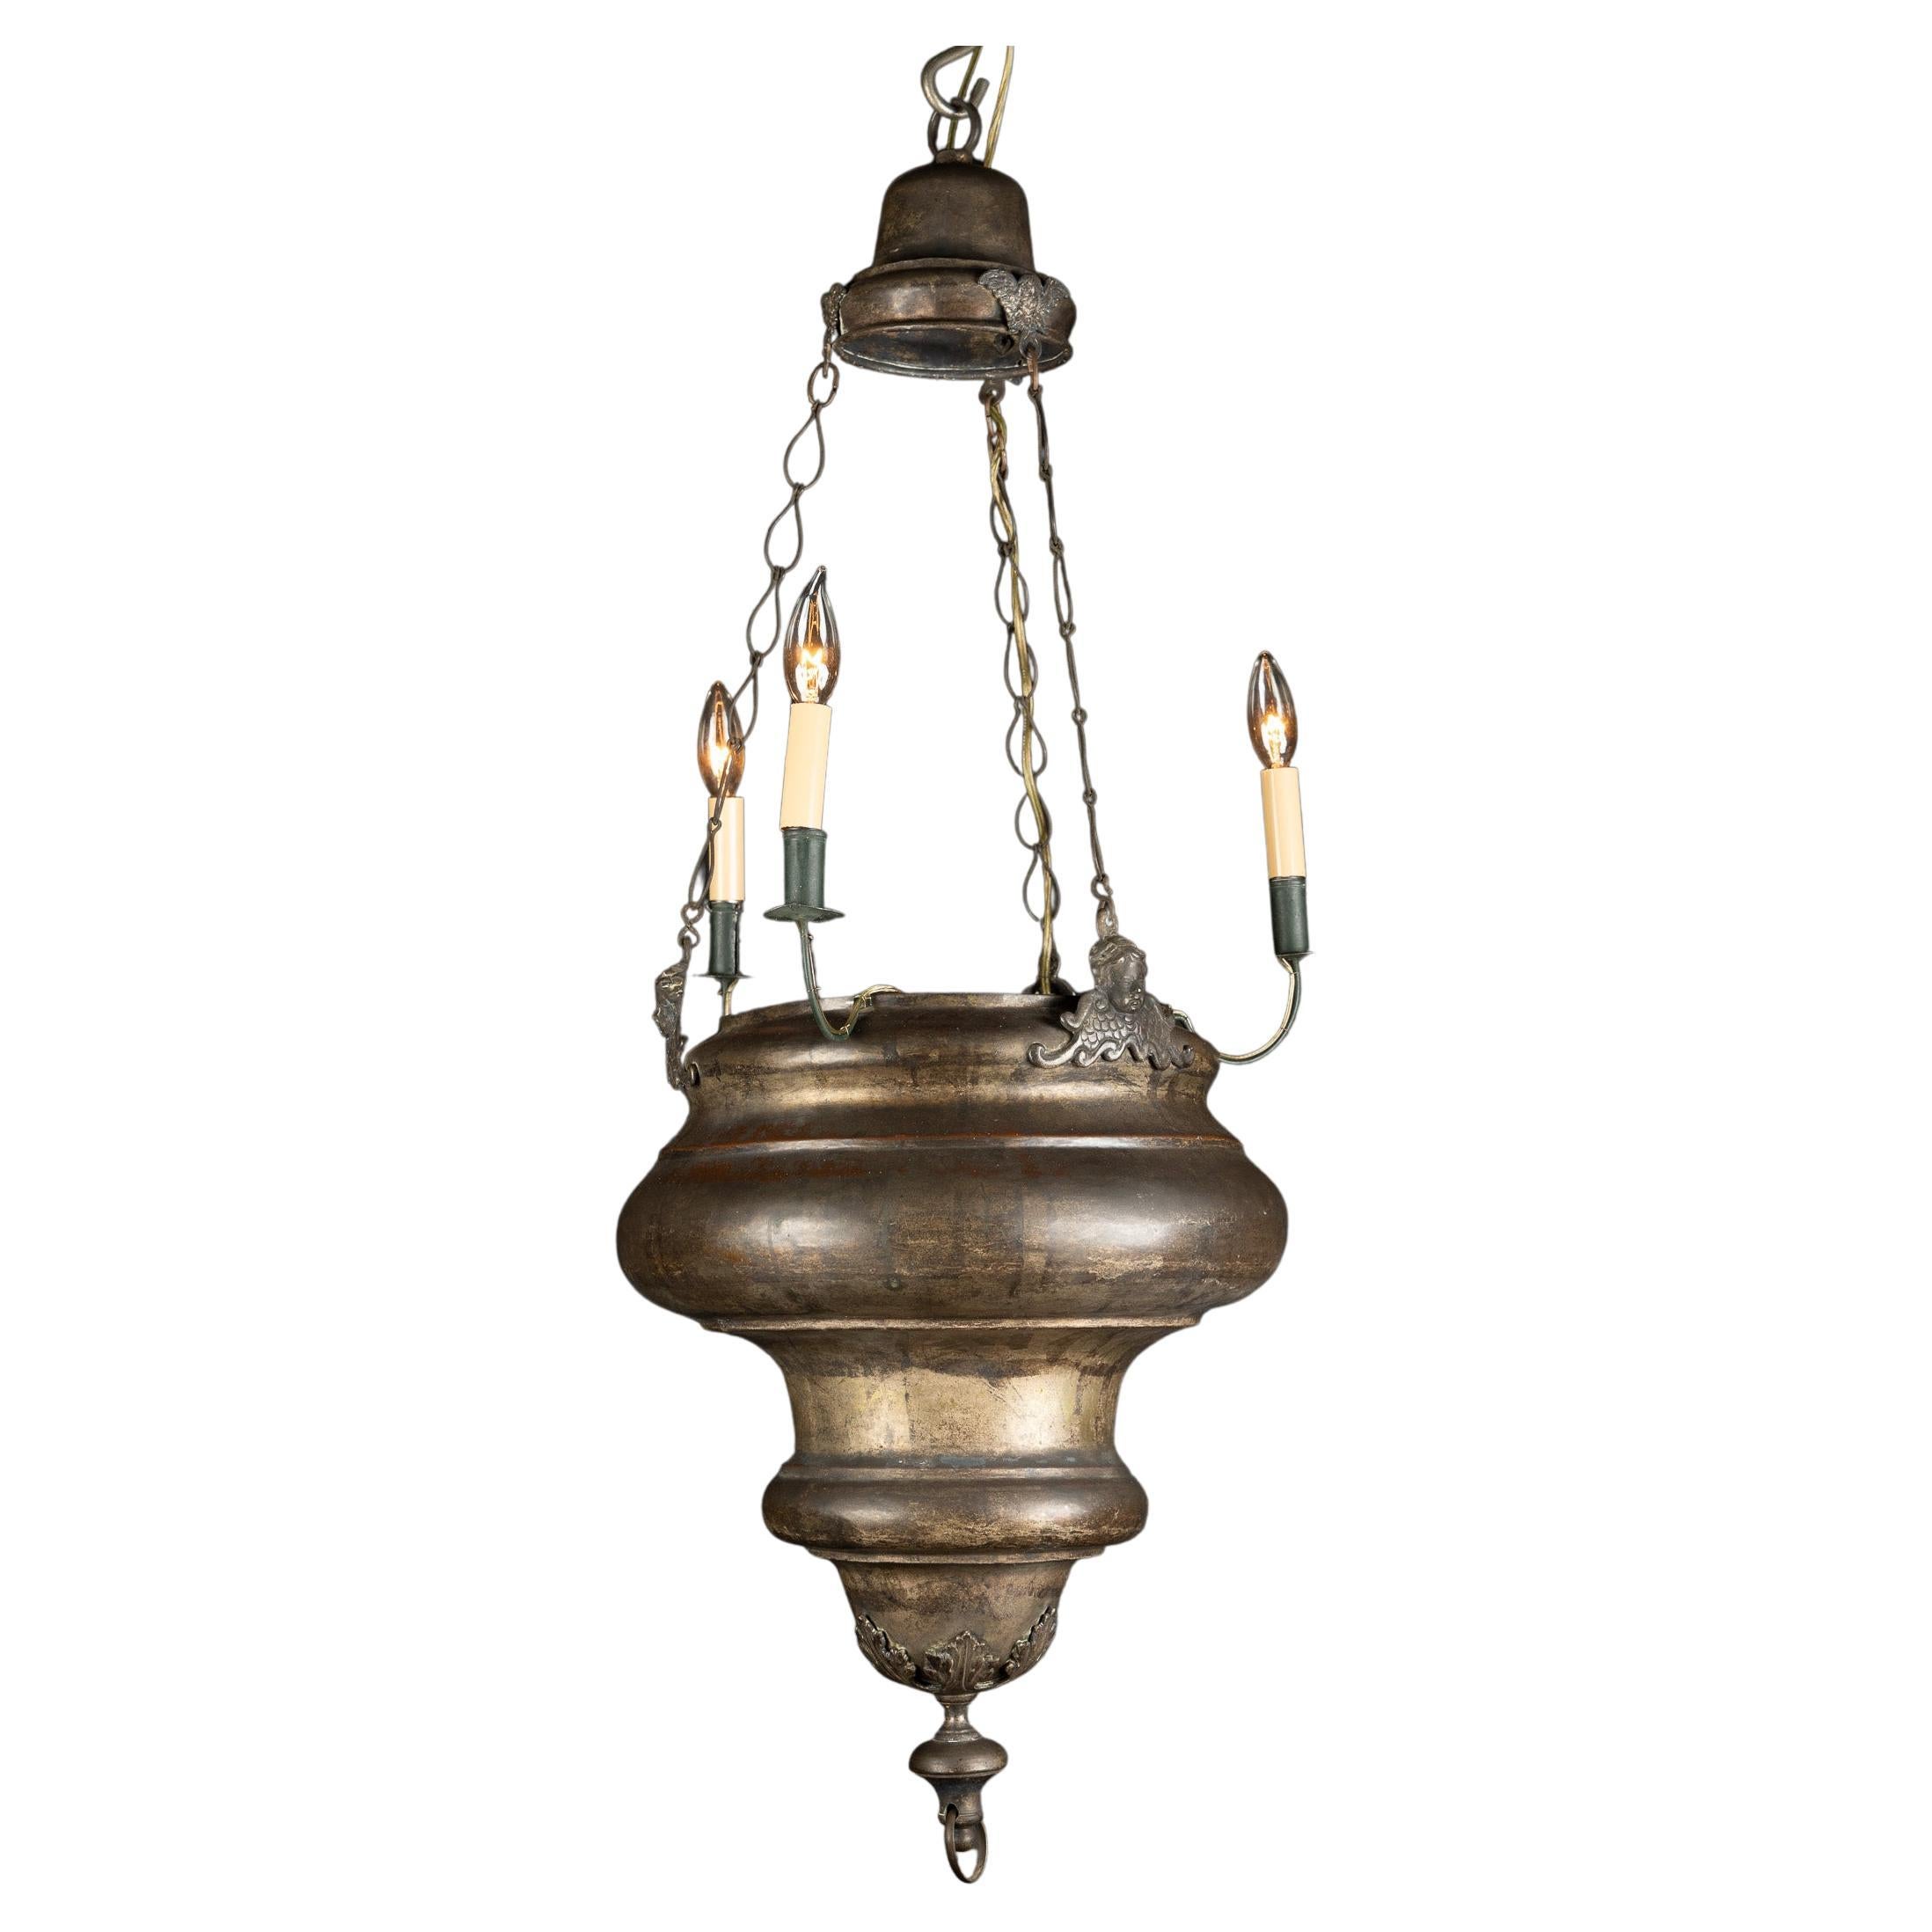 Grand 19th Century French Sanctuary Lantern with Moorish Designs